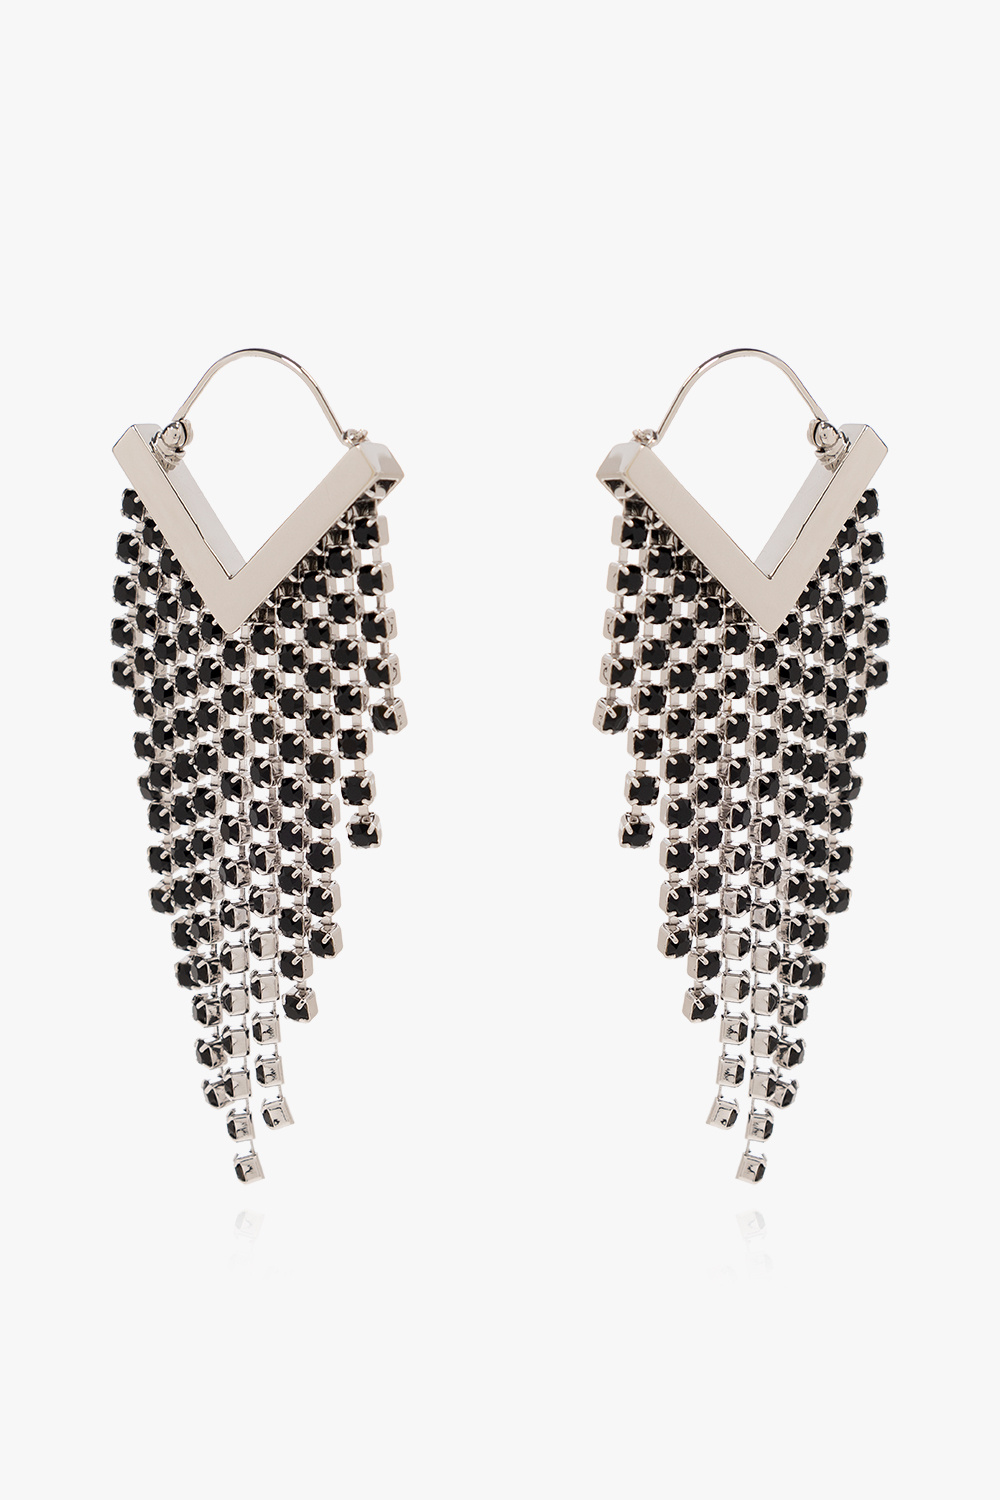 Isabel Marant Crystal earrings